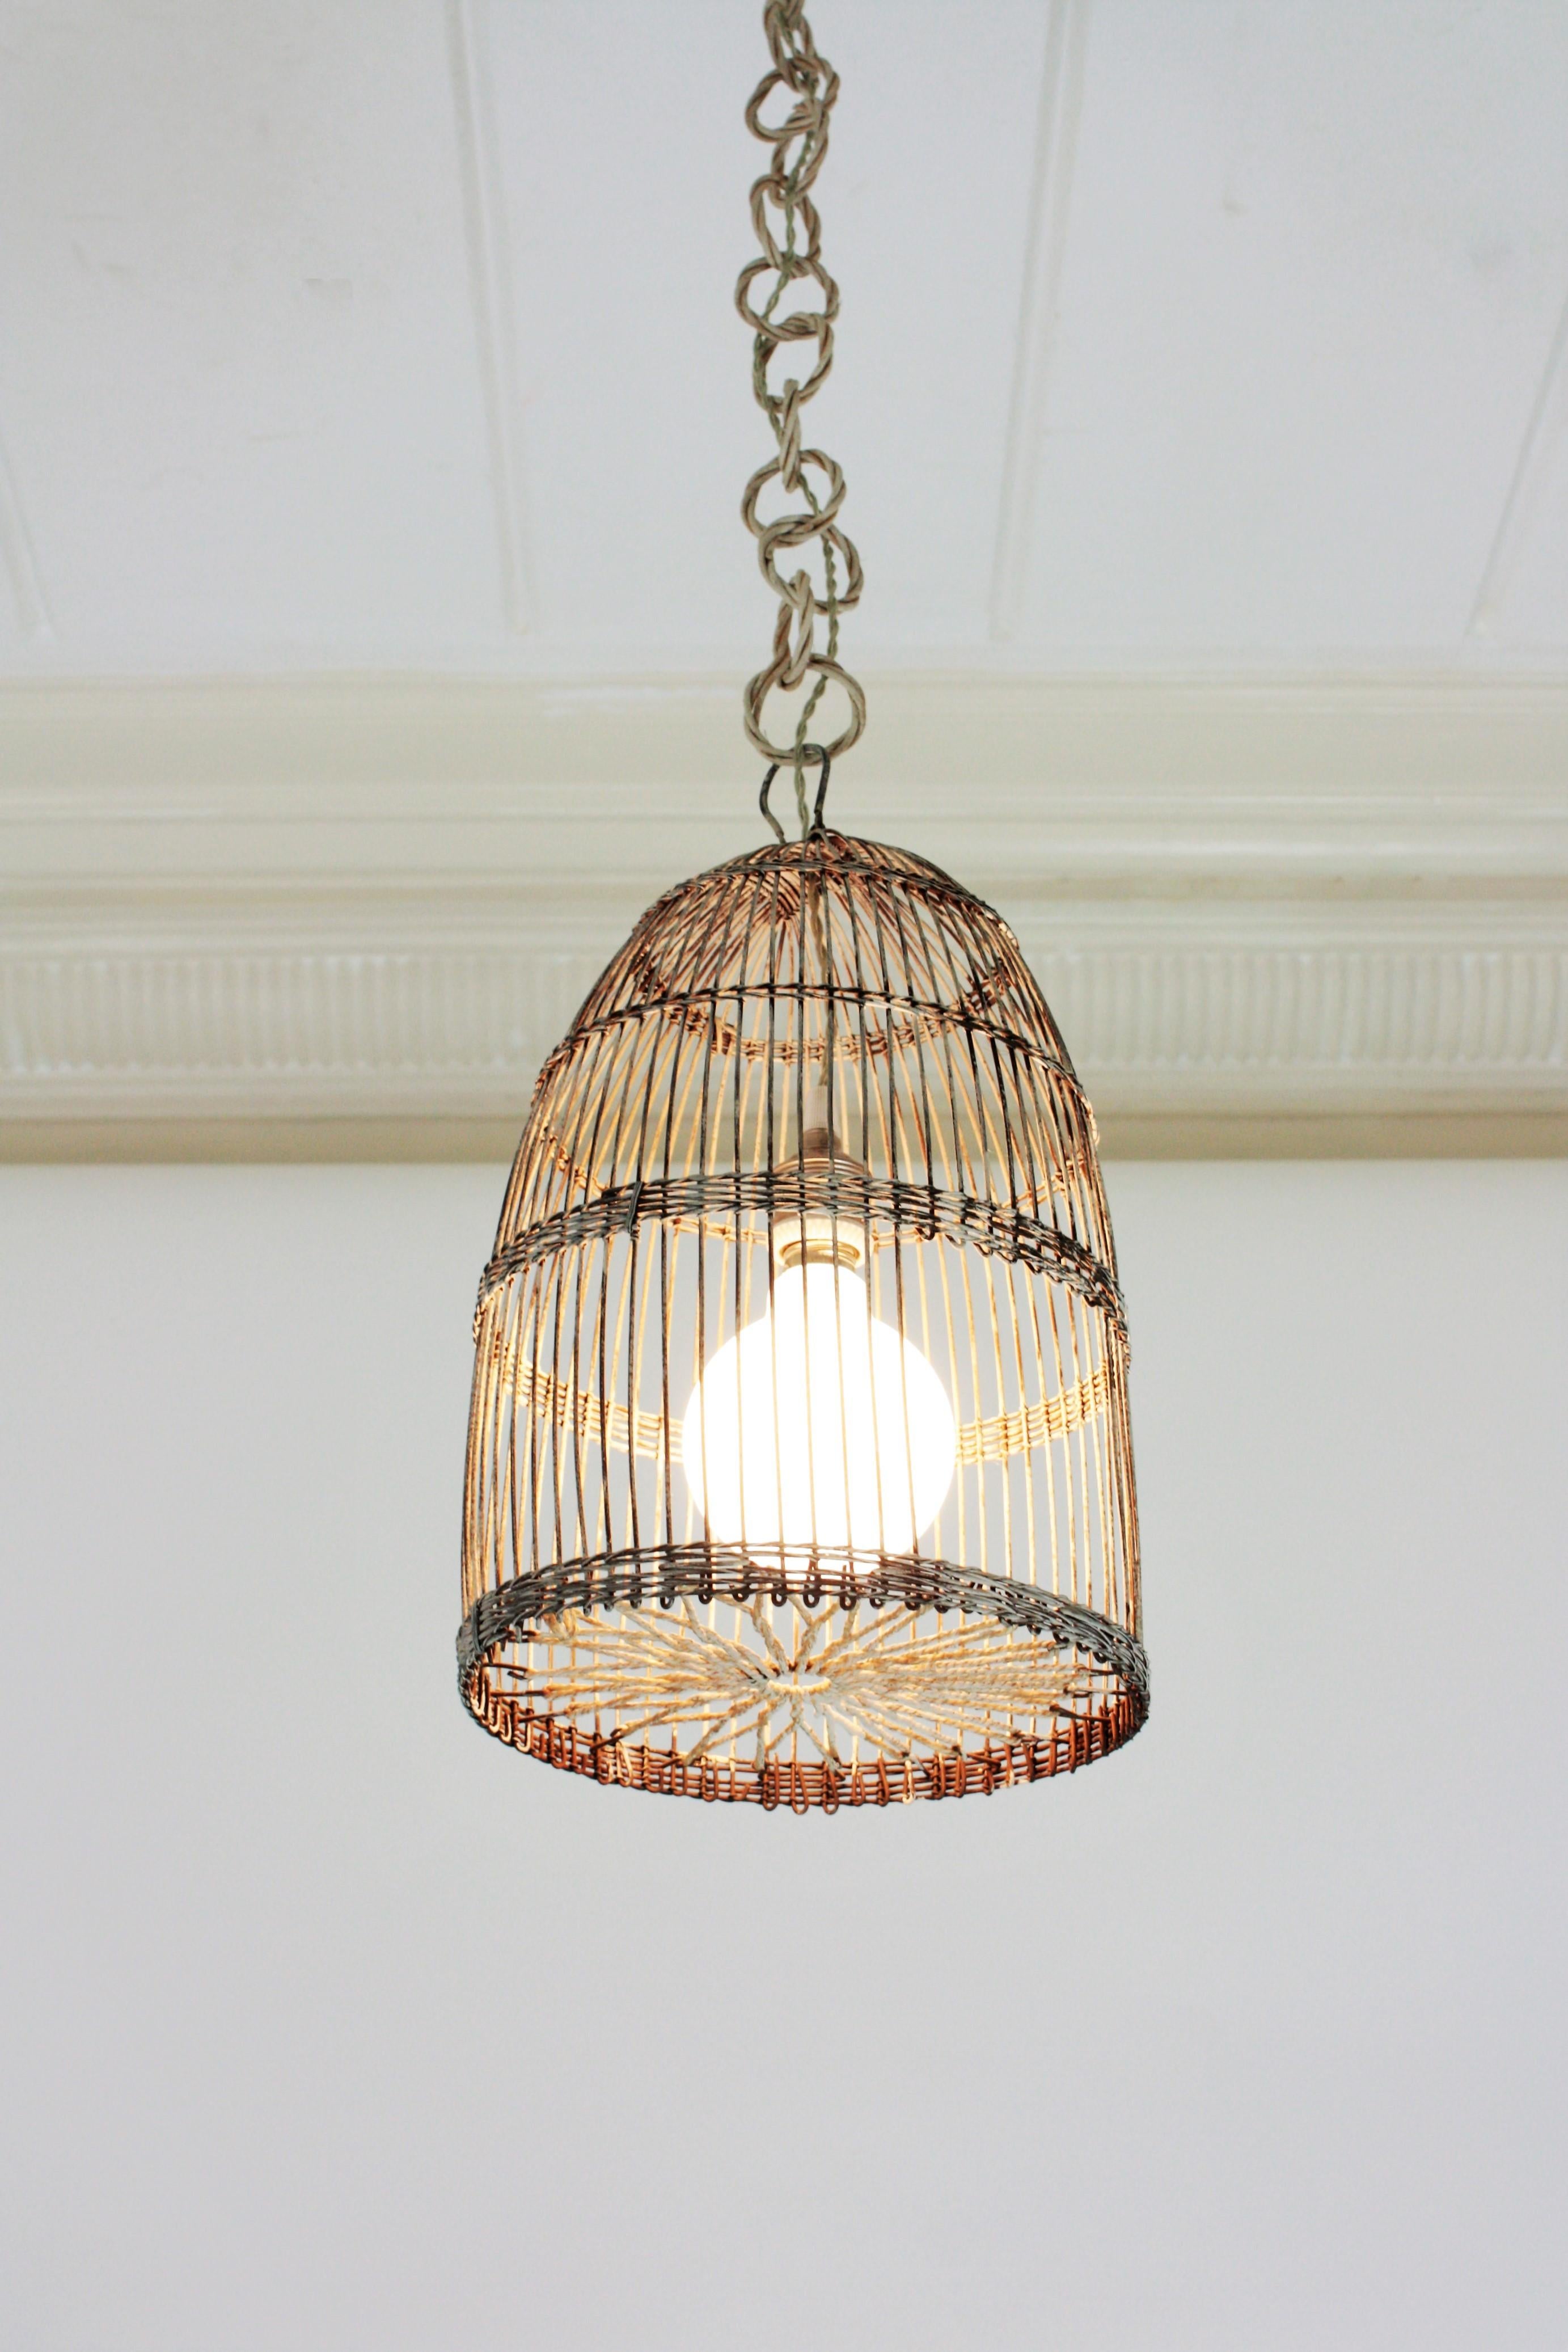 Birdcage Rustic Hanging Light Pendant Lamp 6